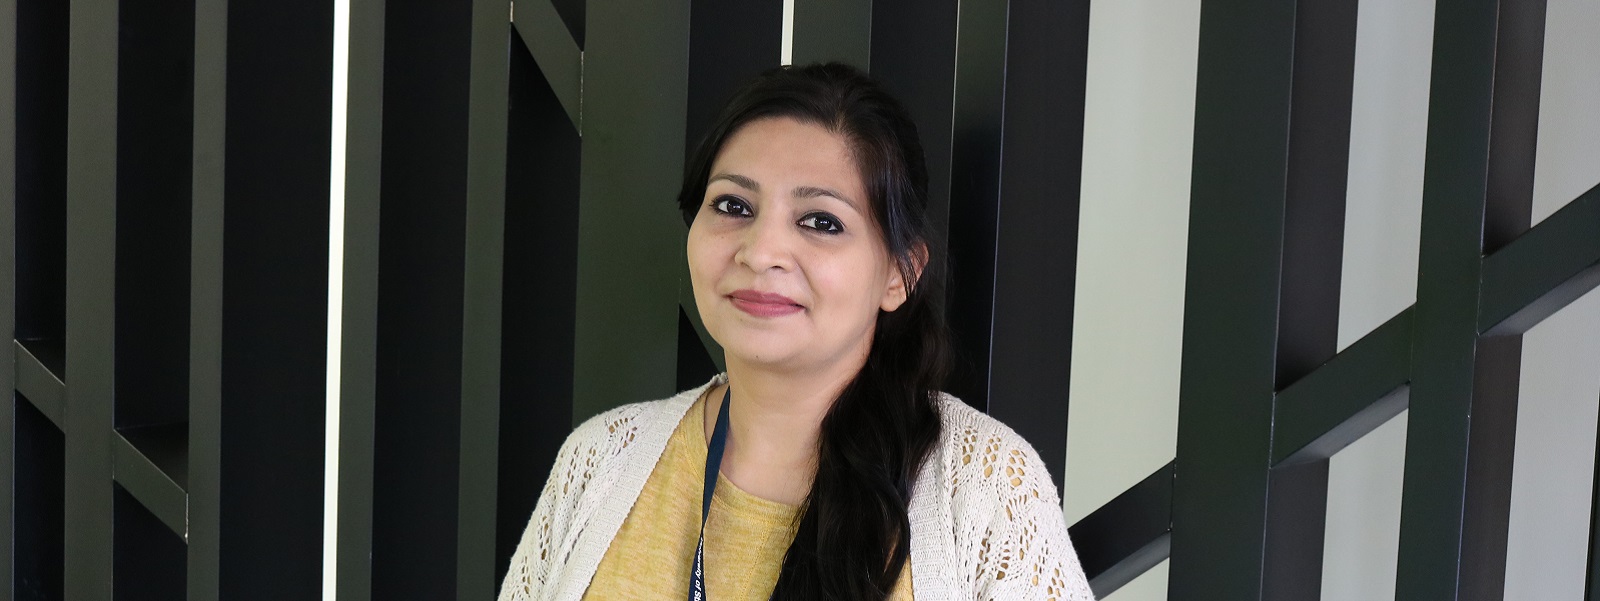 Nameeka Shahid PhD Speech and Language Therapy student